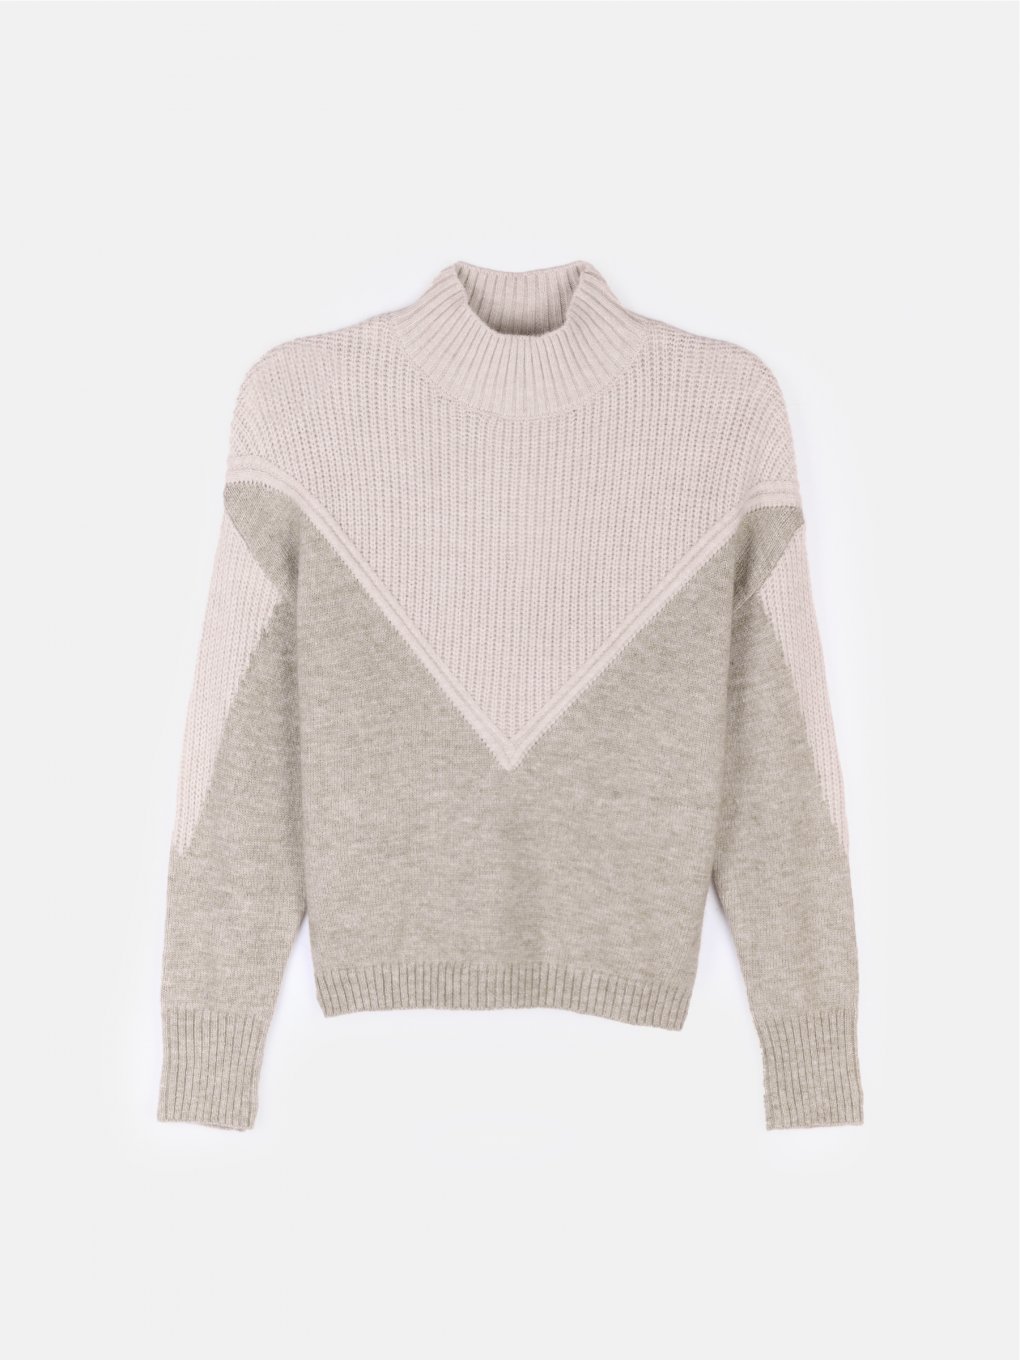 Dámský pletený pulovr